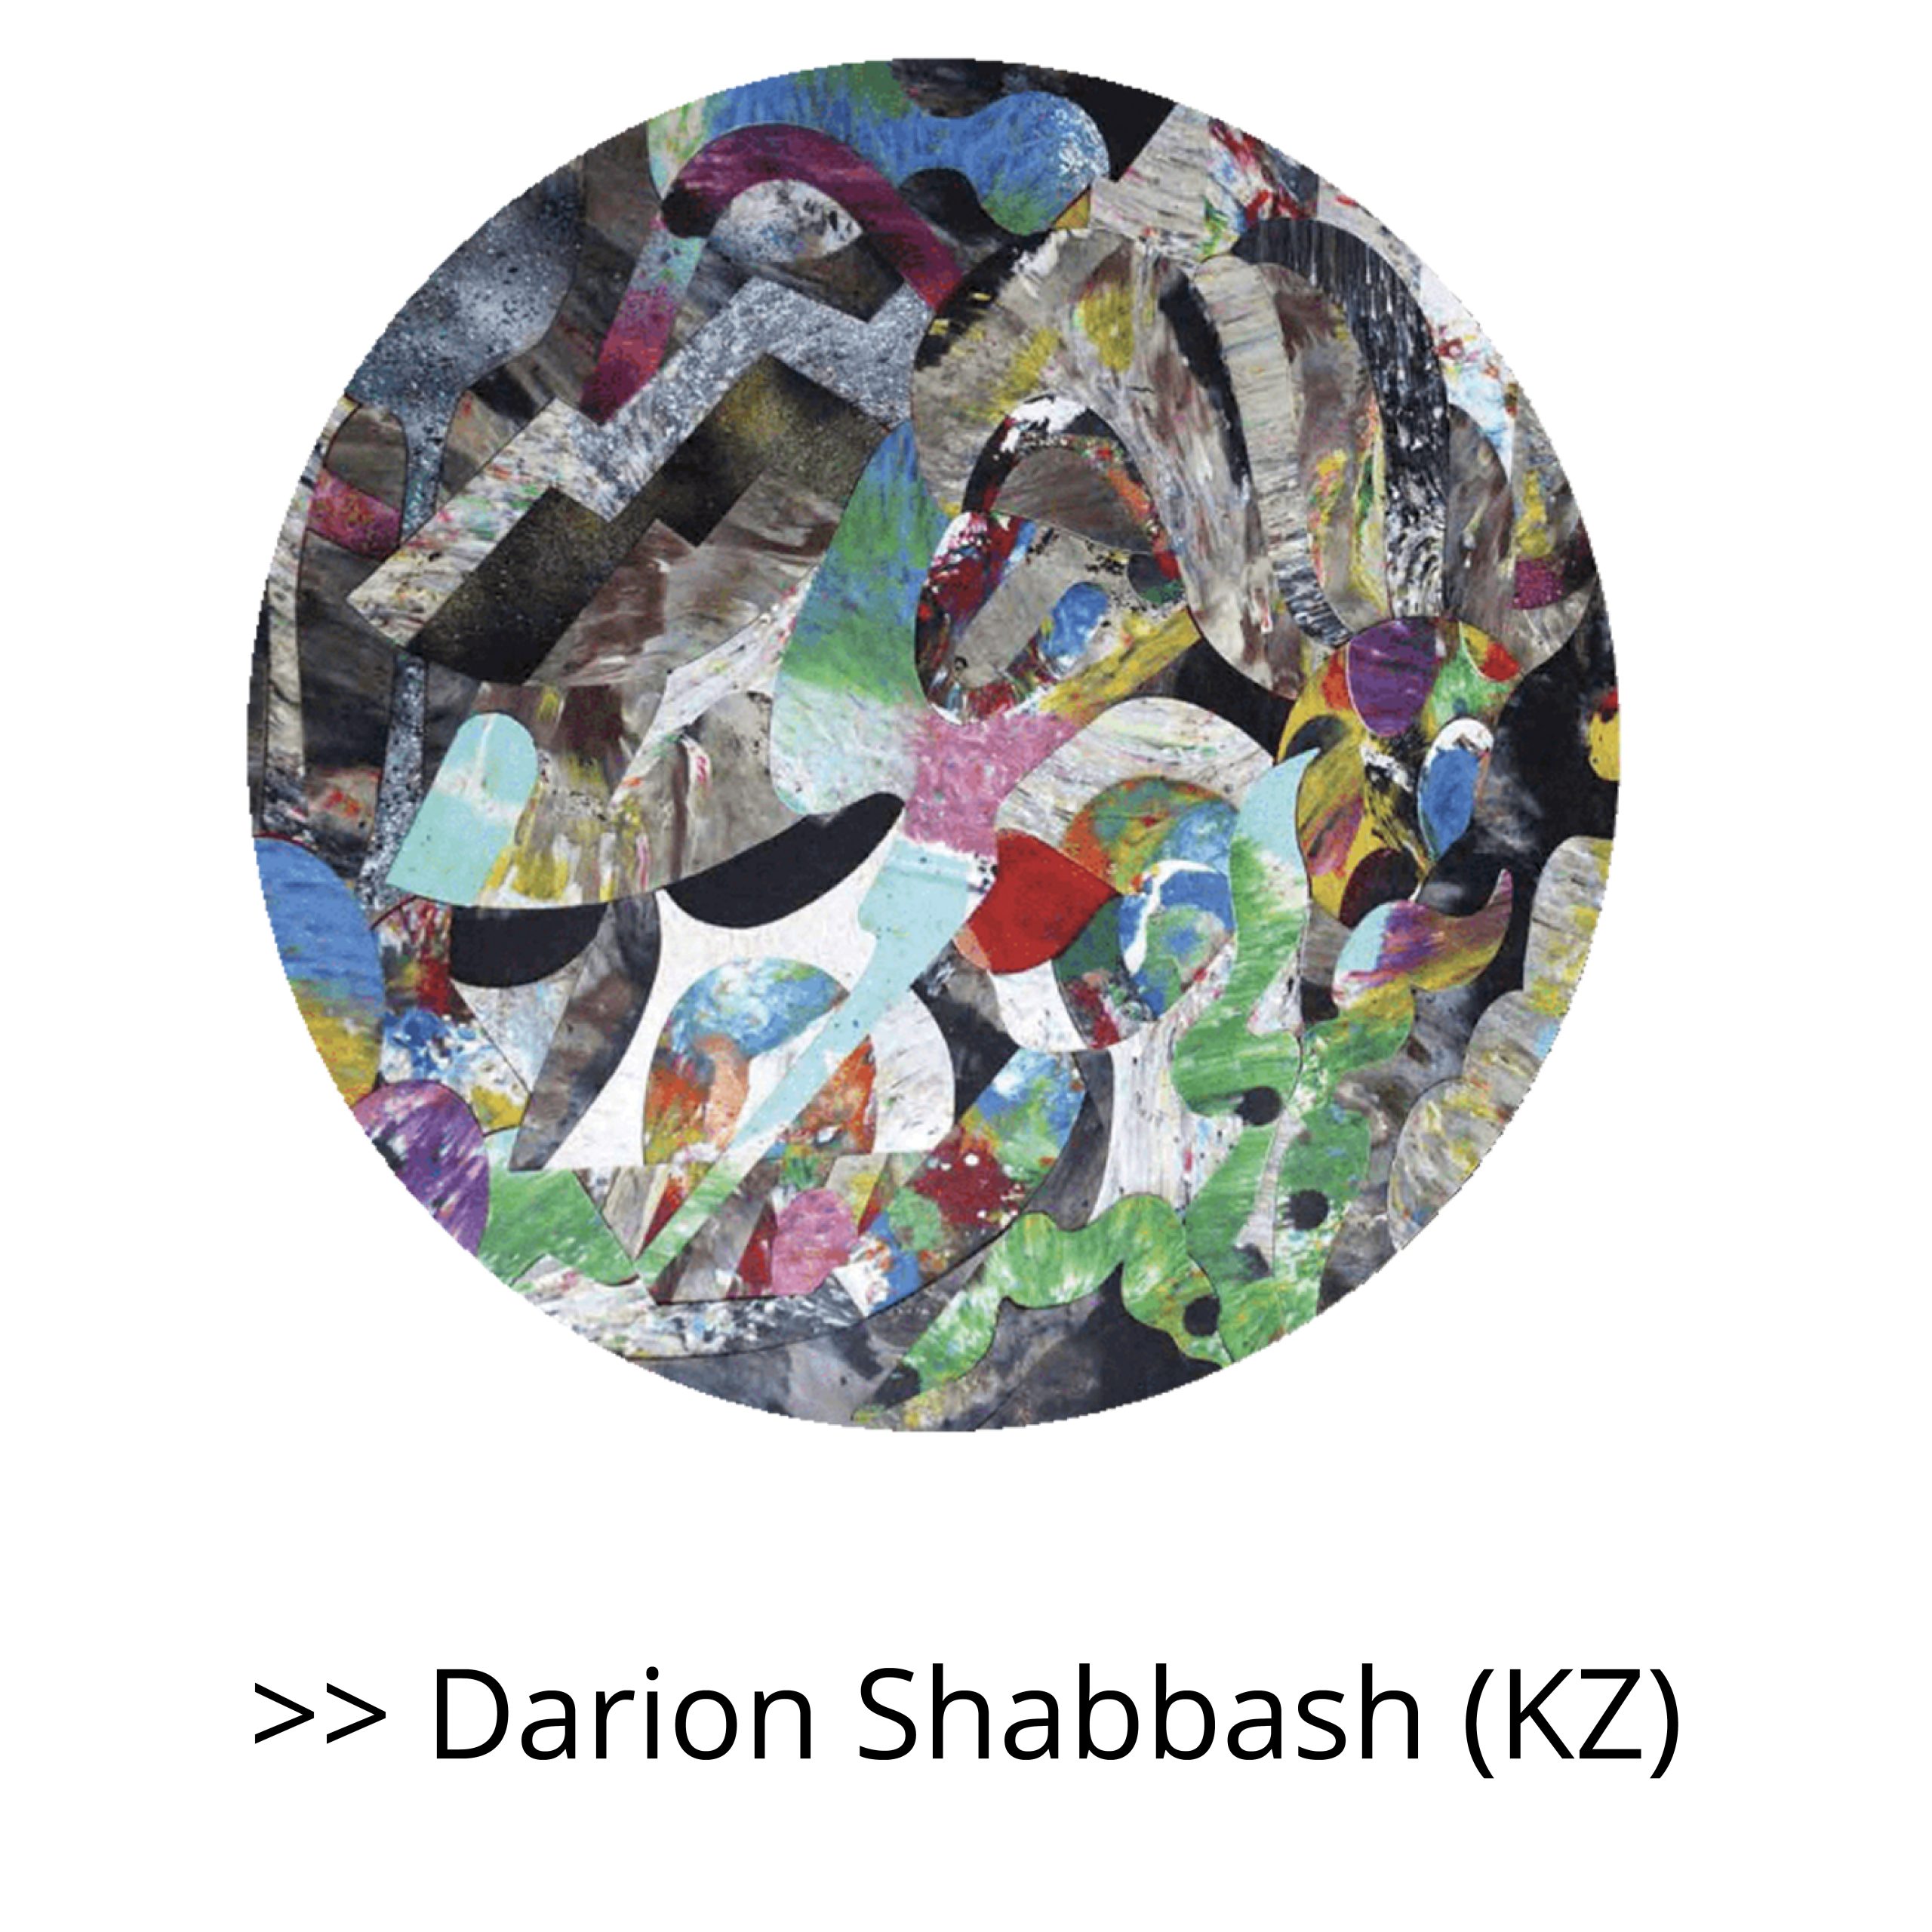 DARION SHABBASH (KZ)